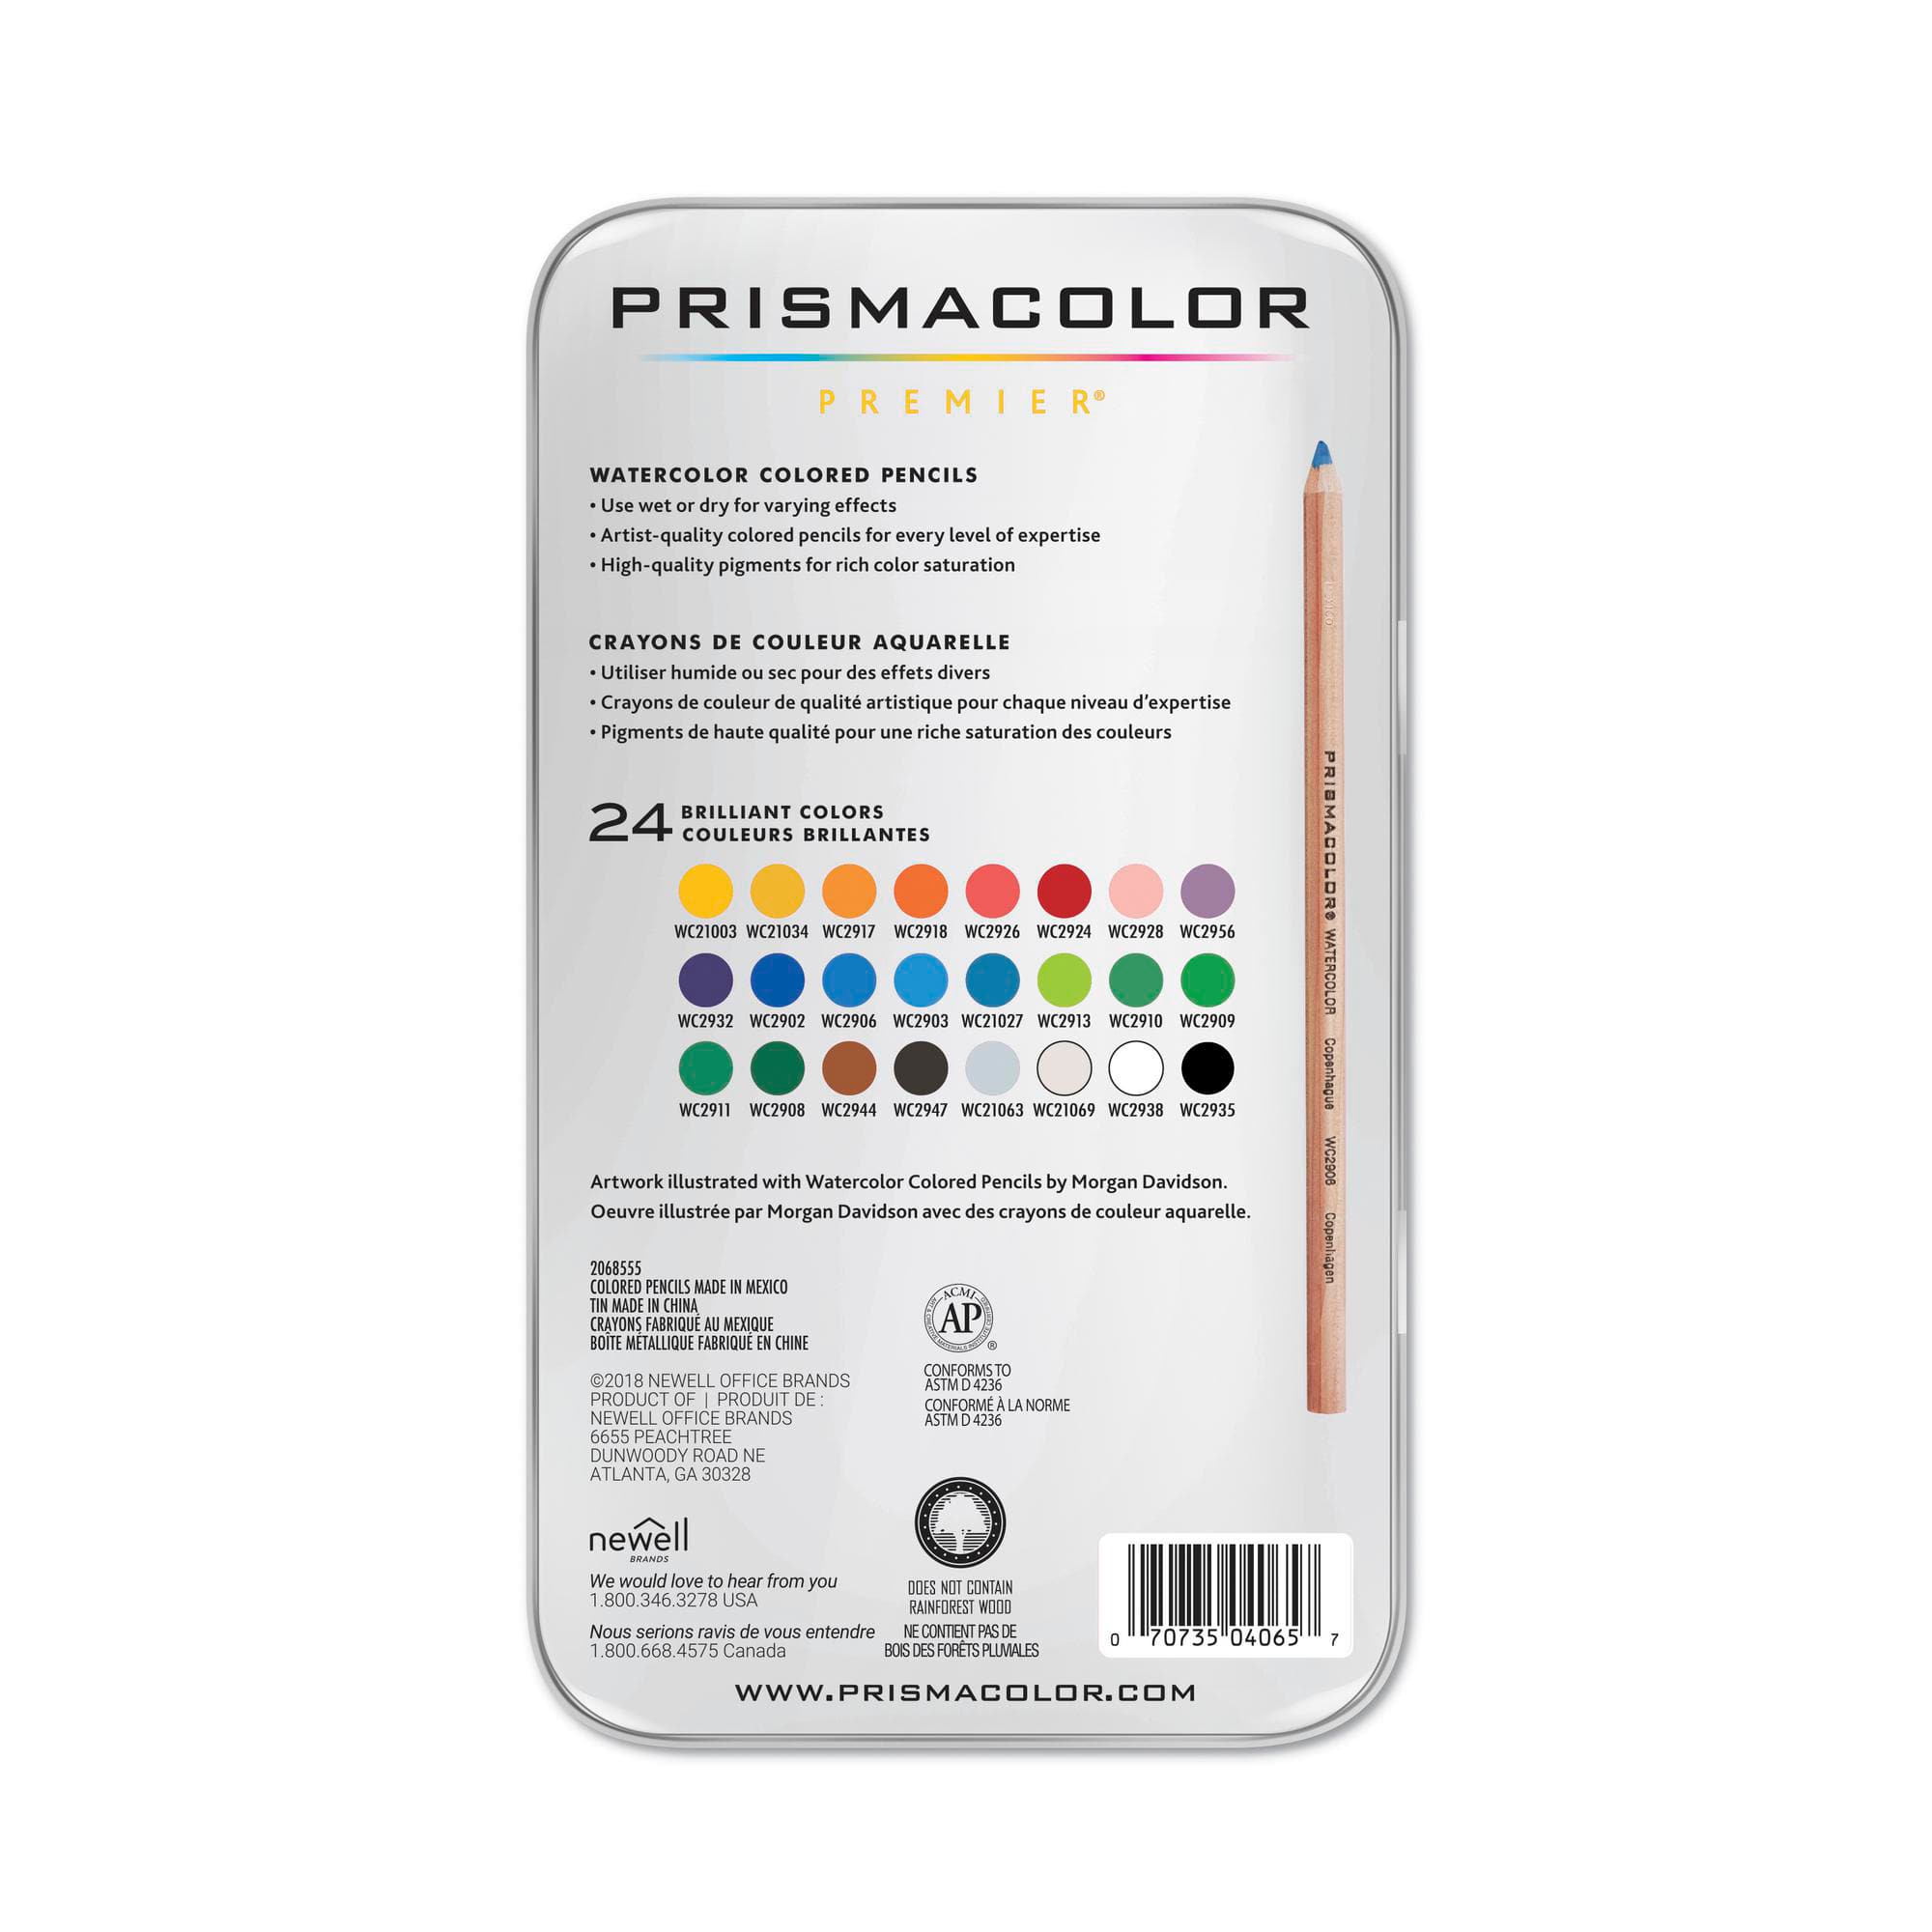 Prismacolor Watercolor Pencil Review